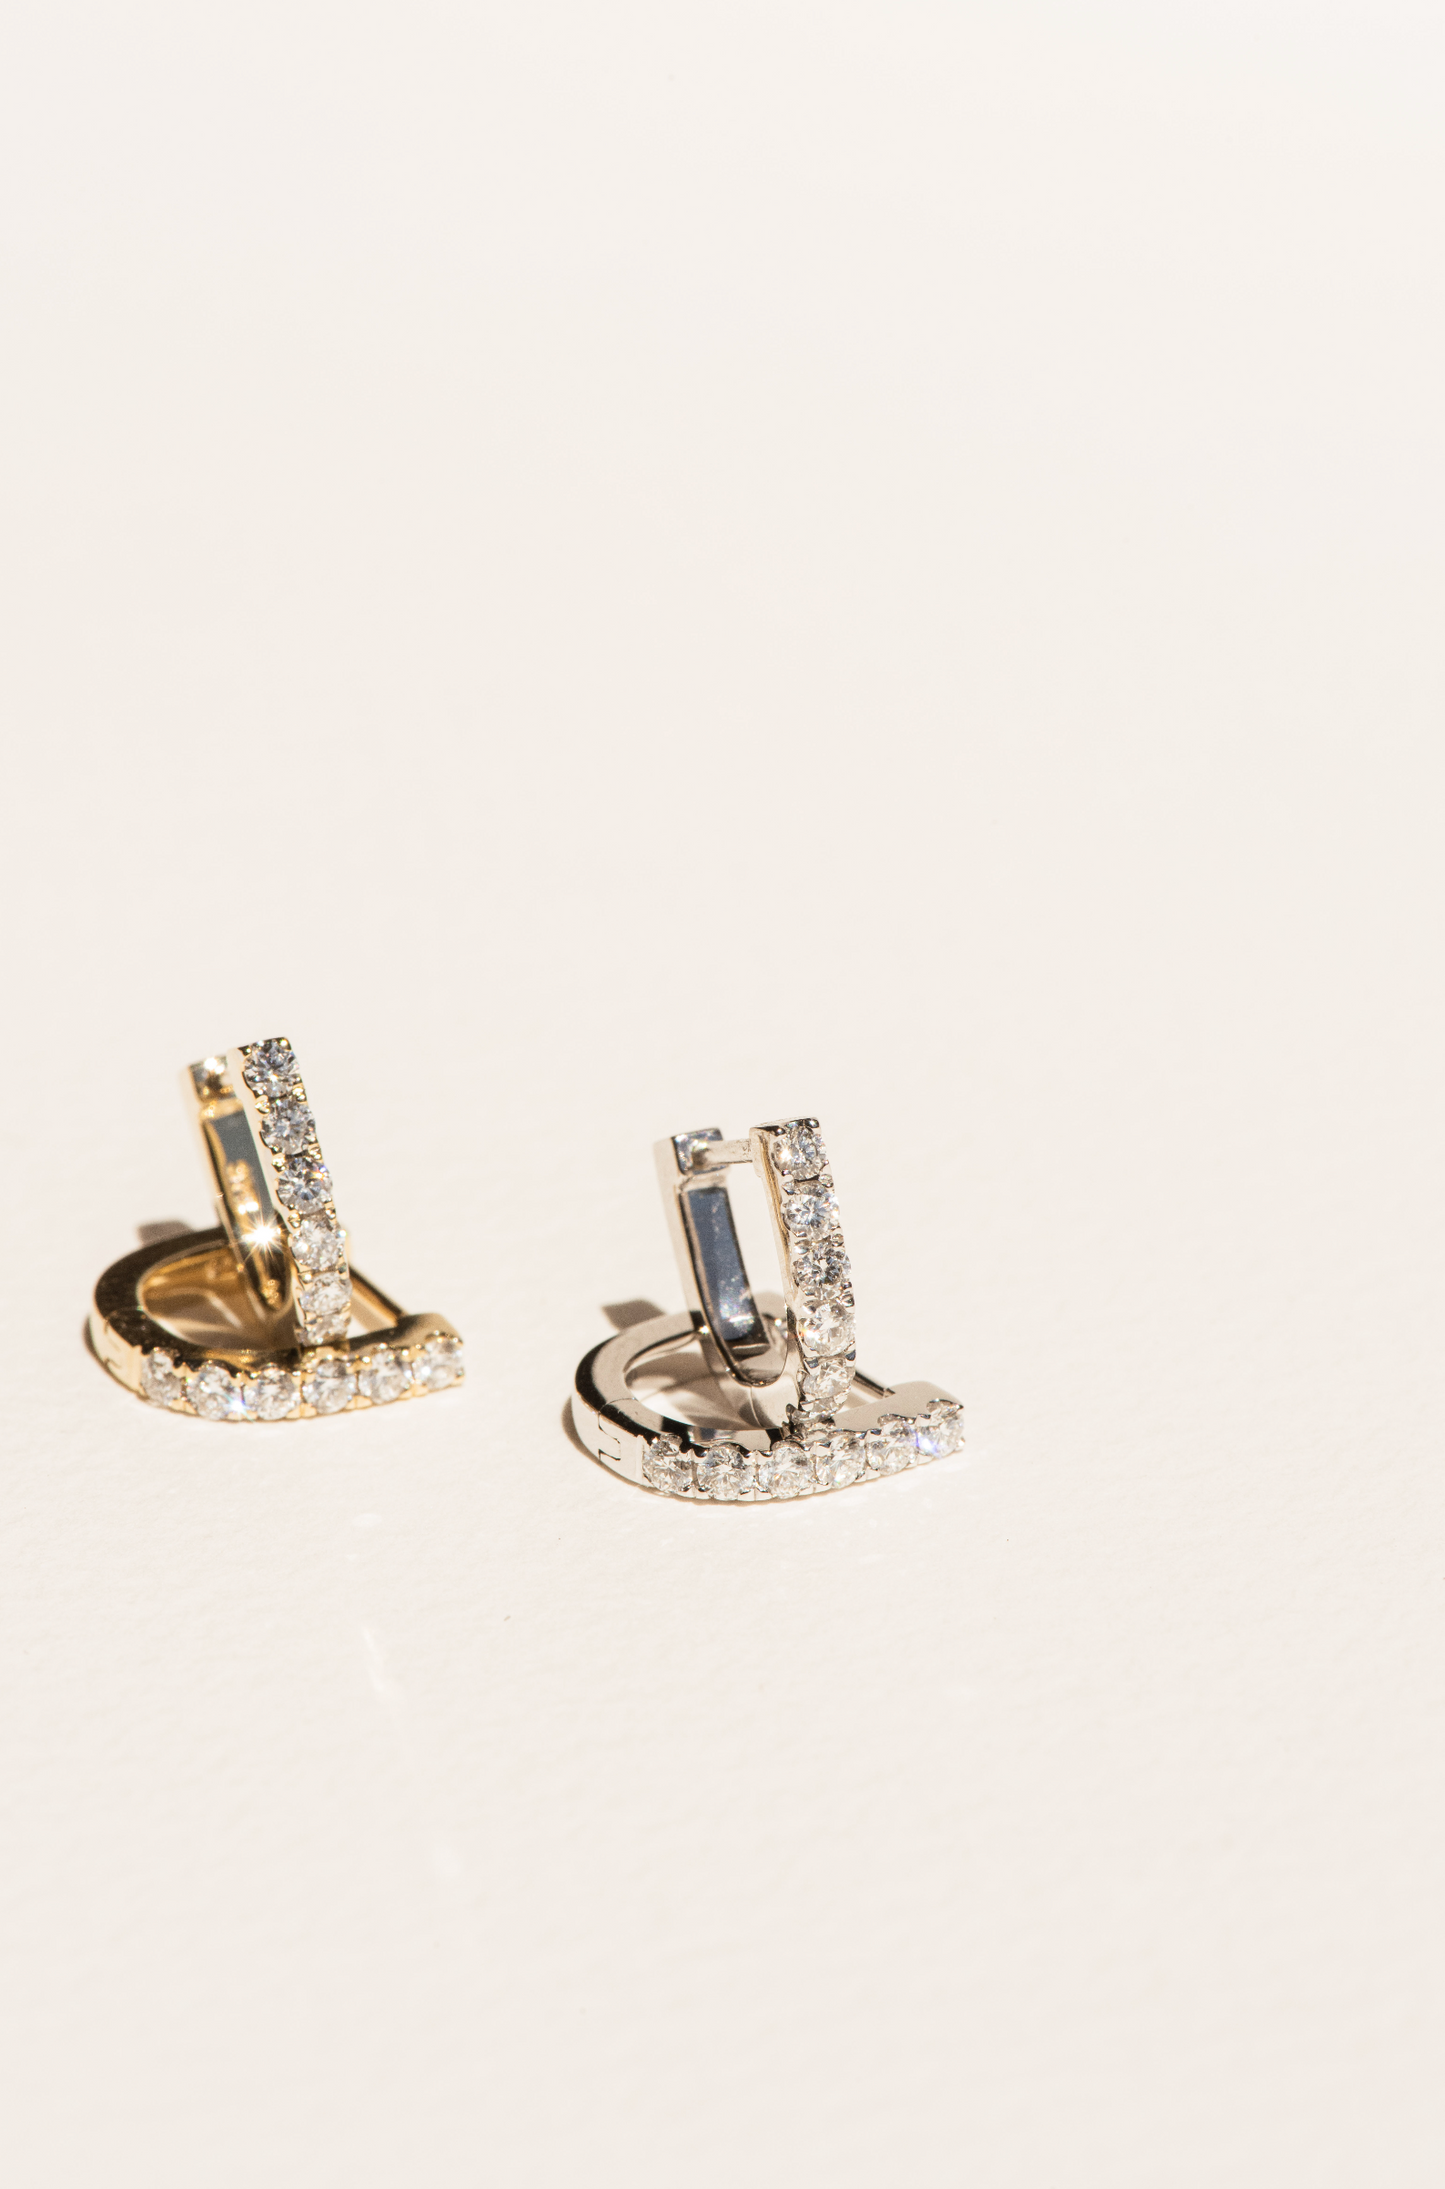 Petite Diamond D Earrings